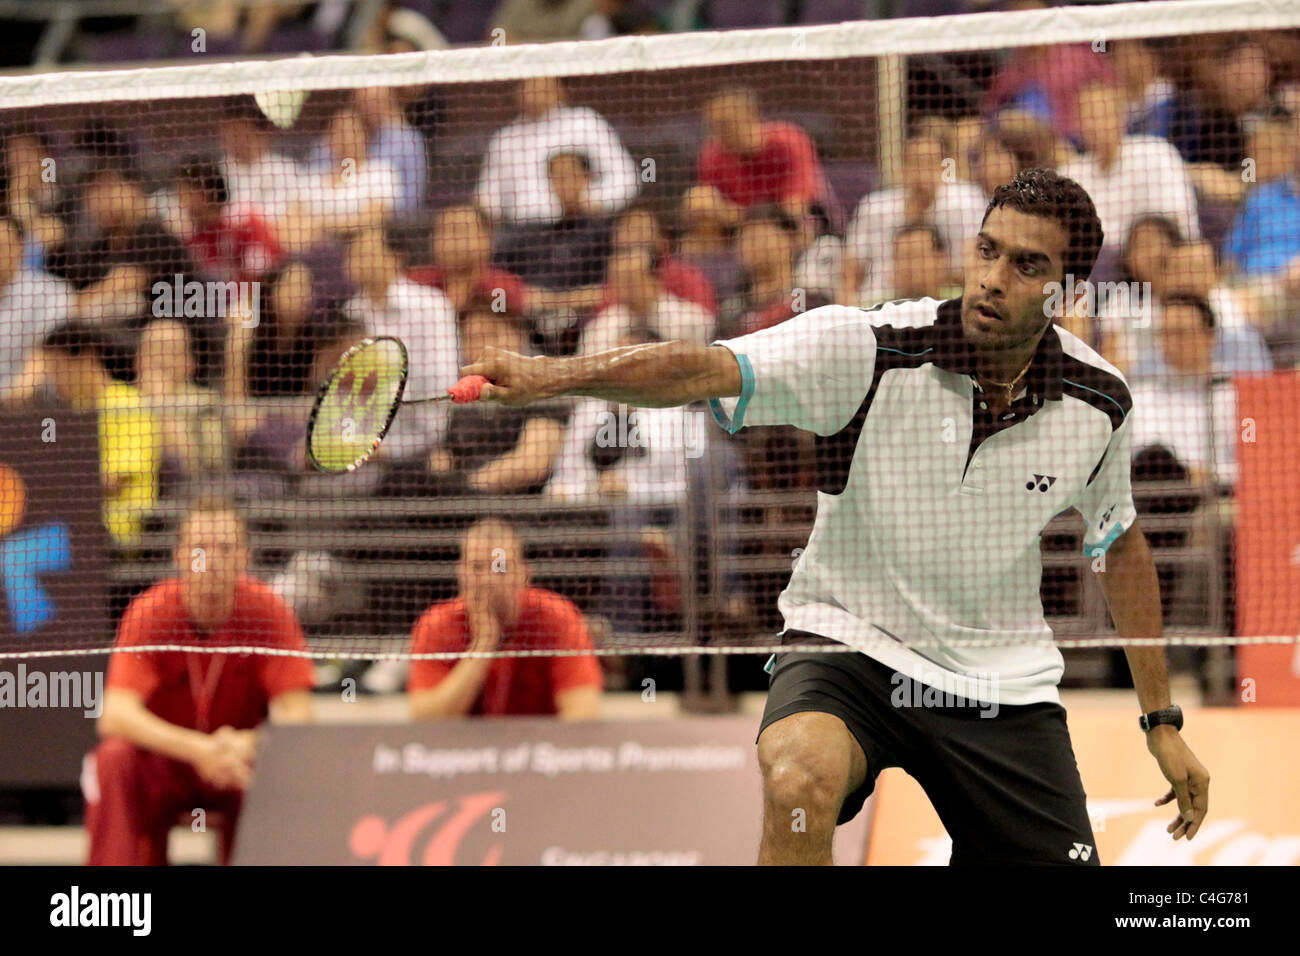 Rajiv ouseph badminton england hi-res stock photography and images - Alamy